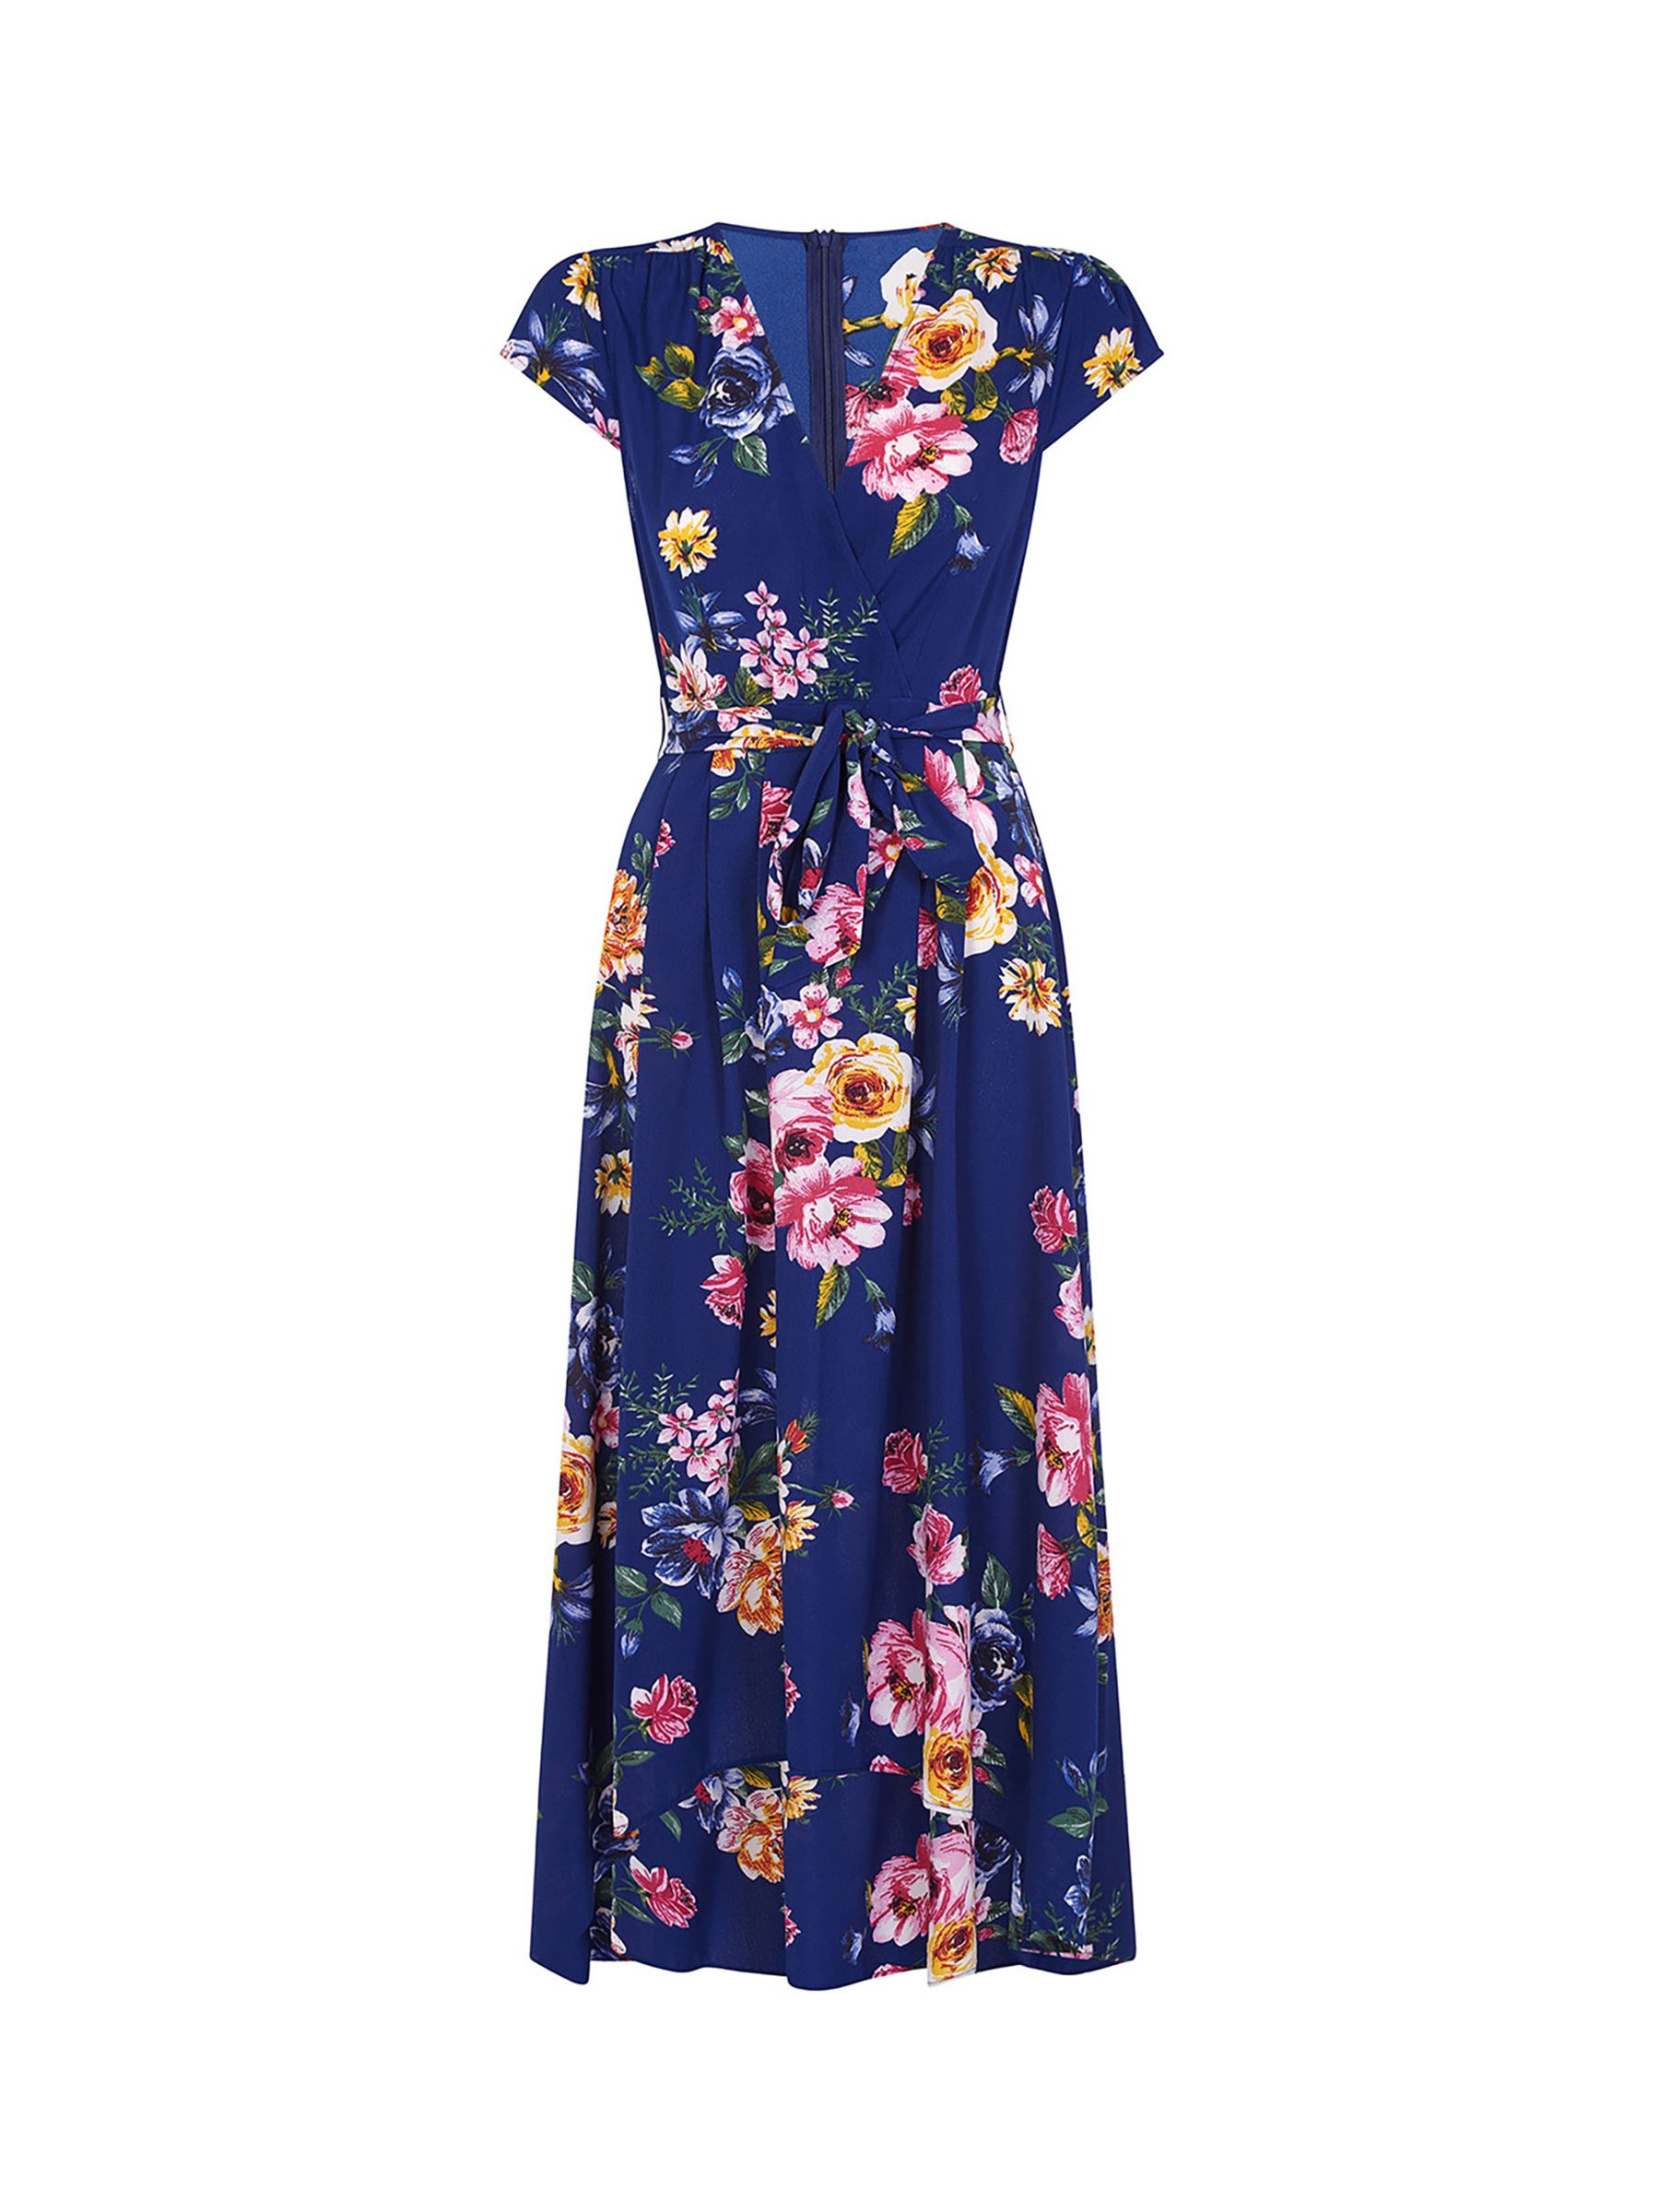 Mela London Floral Print Wrap Midi Dress, Navy at John Lewis & Partners